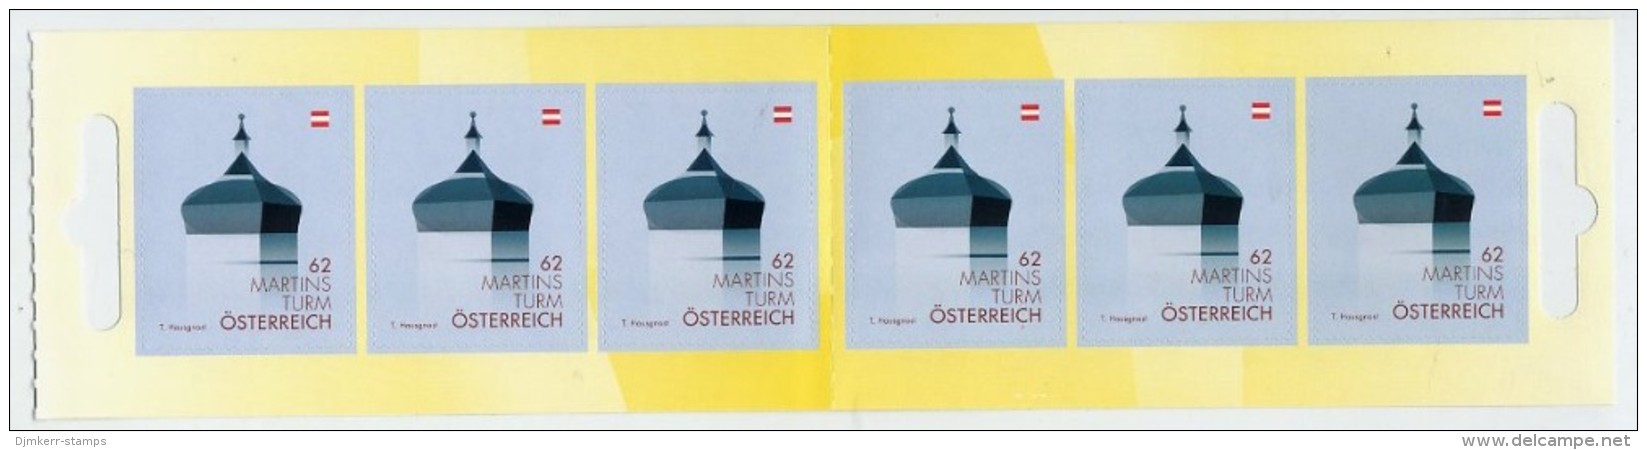 AUSTRIA 2013 Landmarks  Definitive 62 C. (Martinsturm) Retail Pack With 10 Stamps.  Michel MH 0-22 (3093) - Neufs